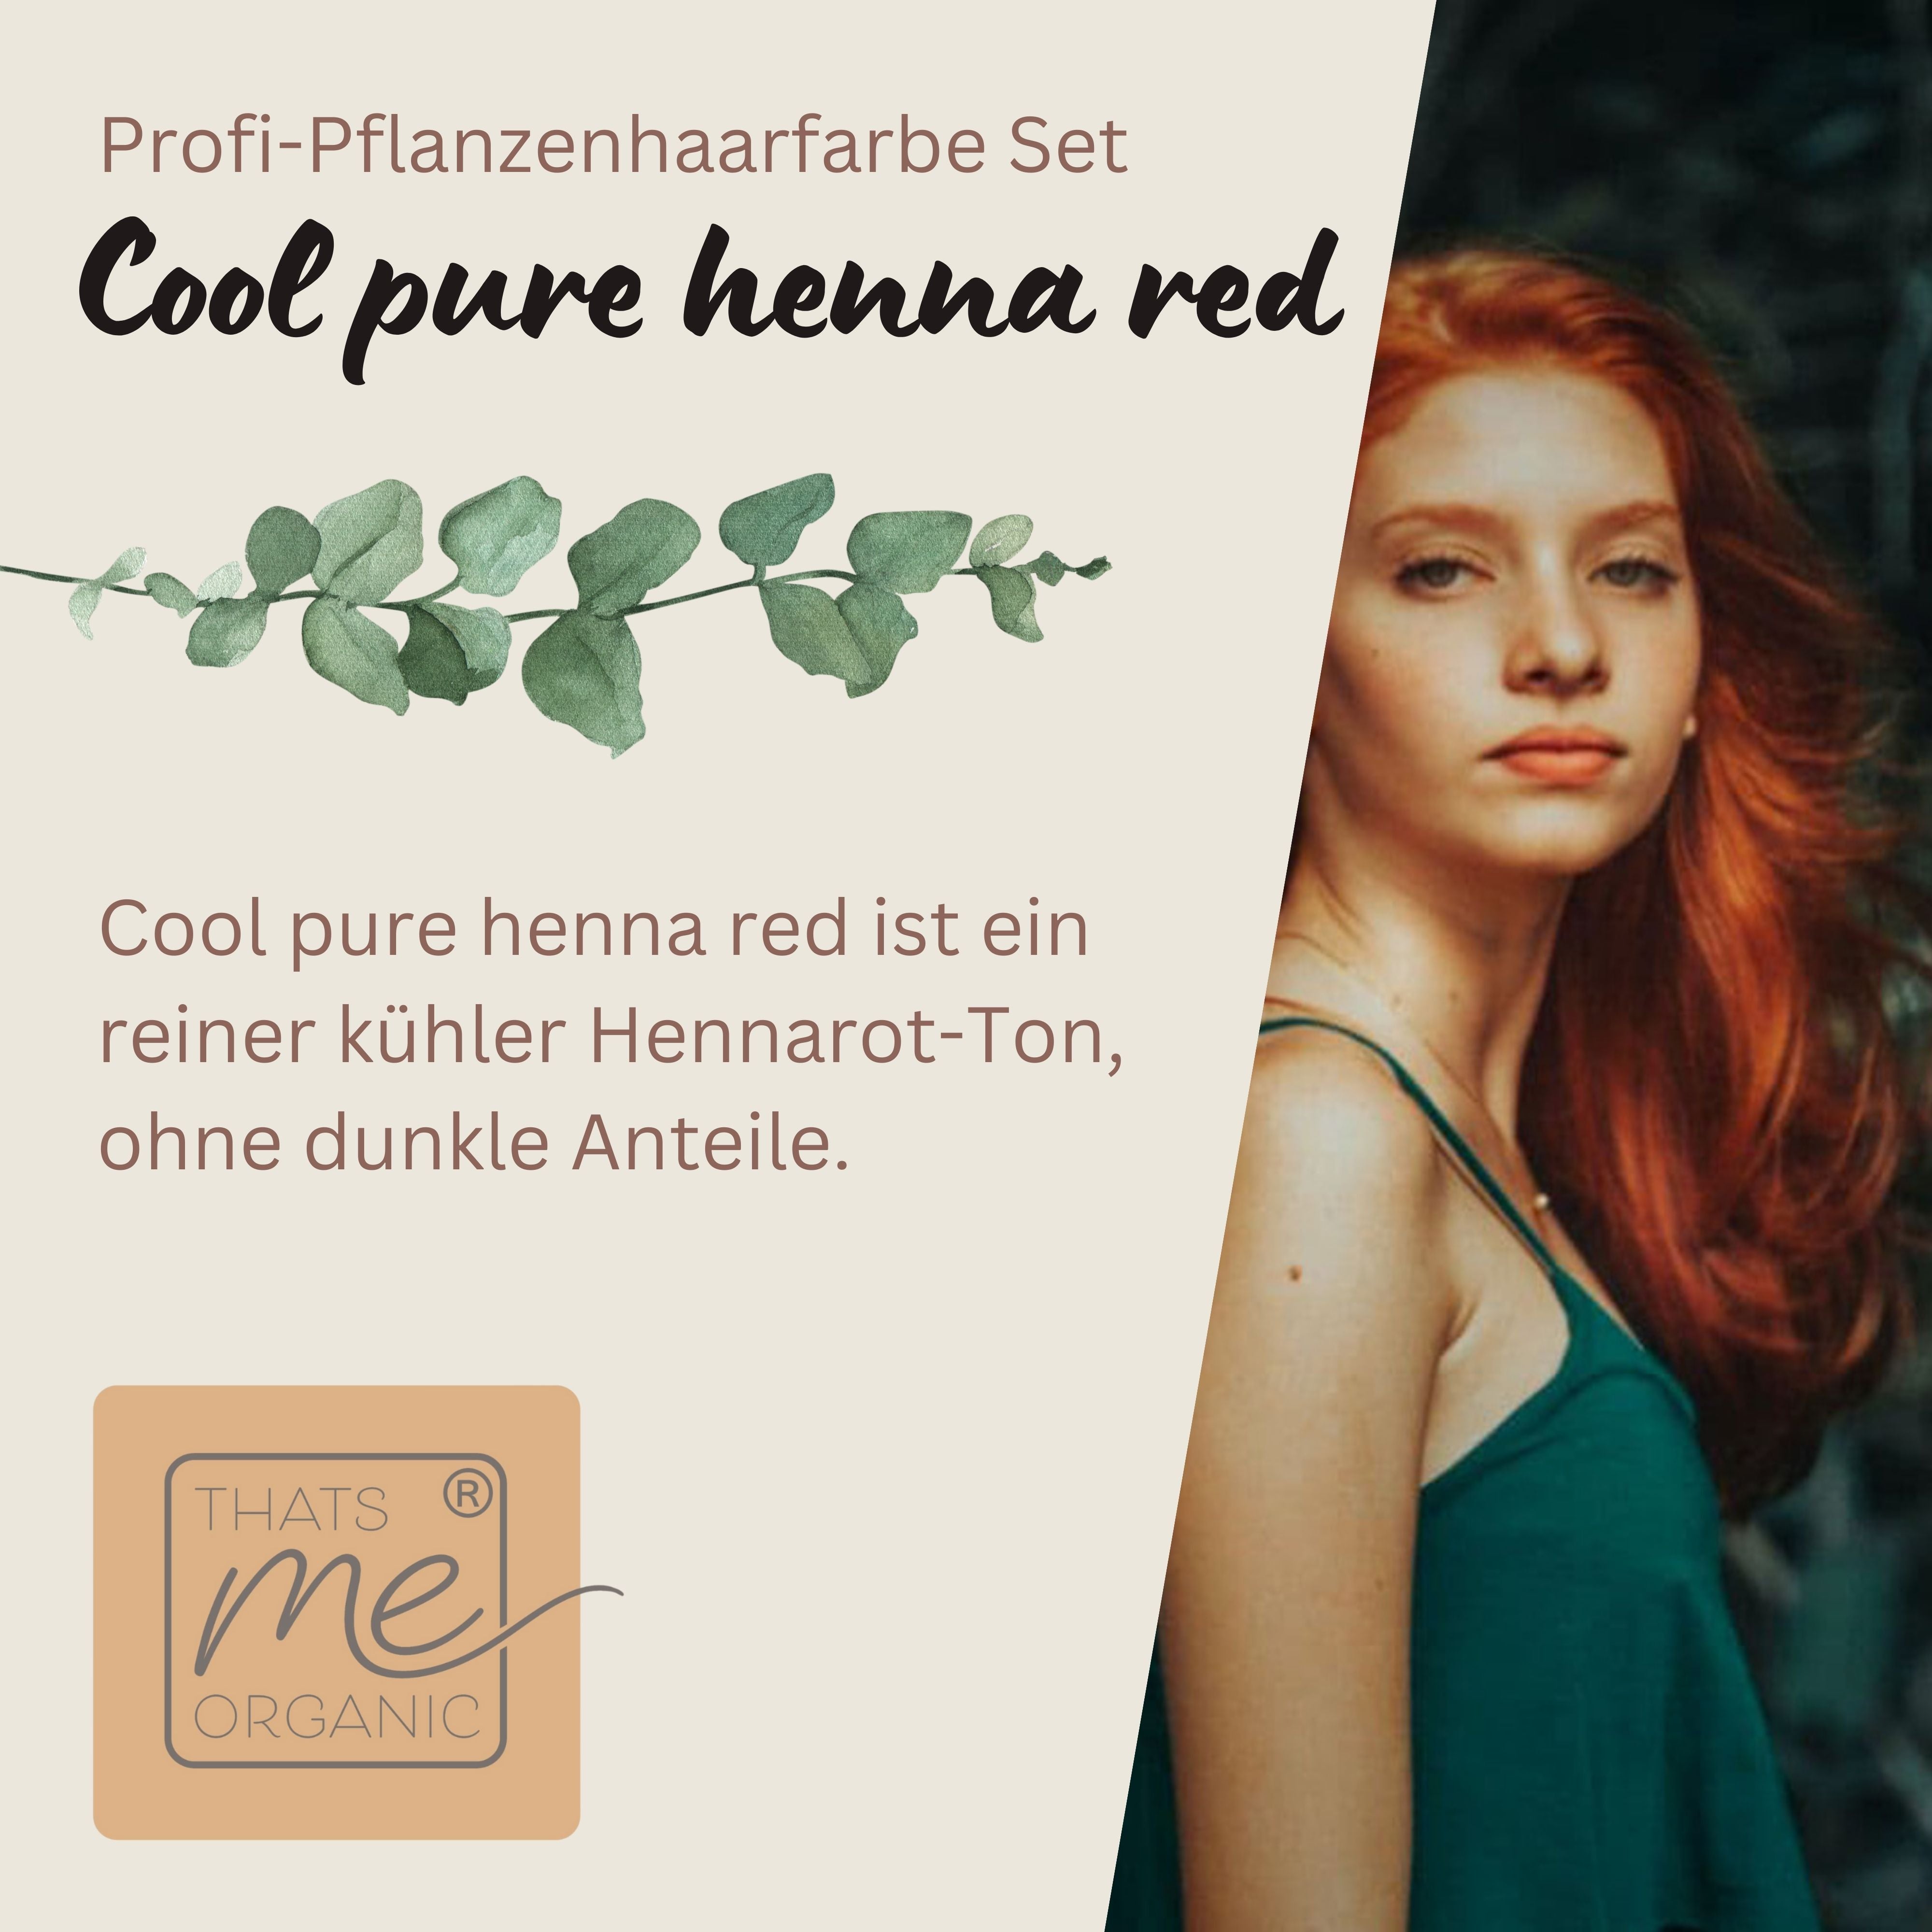 Profi-Pflanzenhaarfarbe SET "kaltes rotes Henna pur - cool pure henna red"